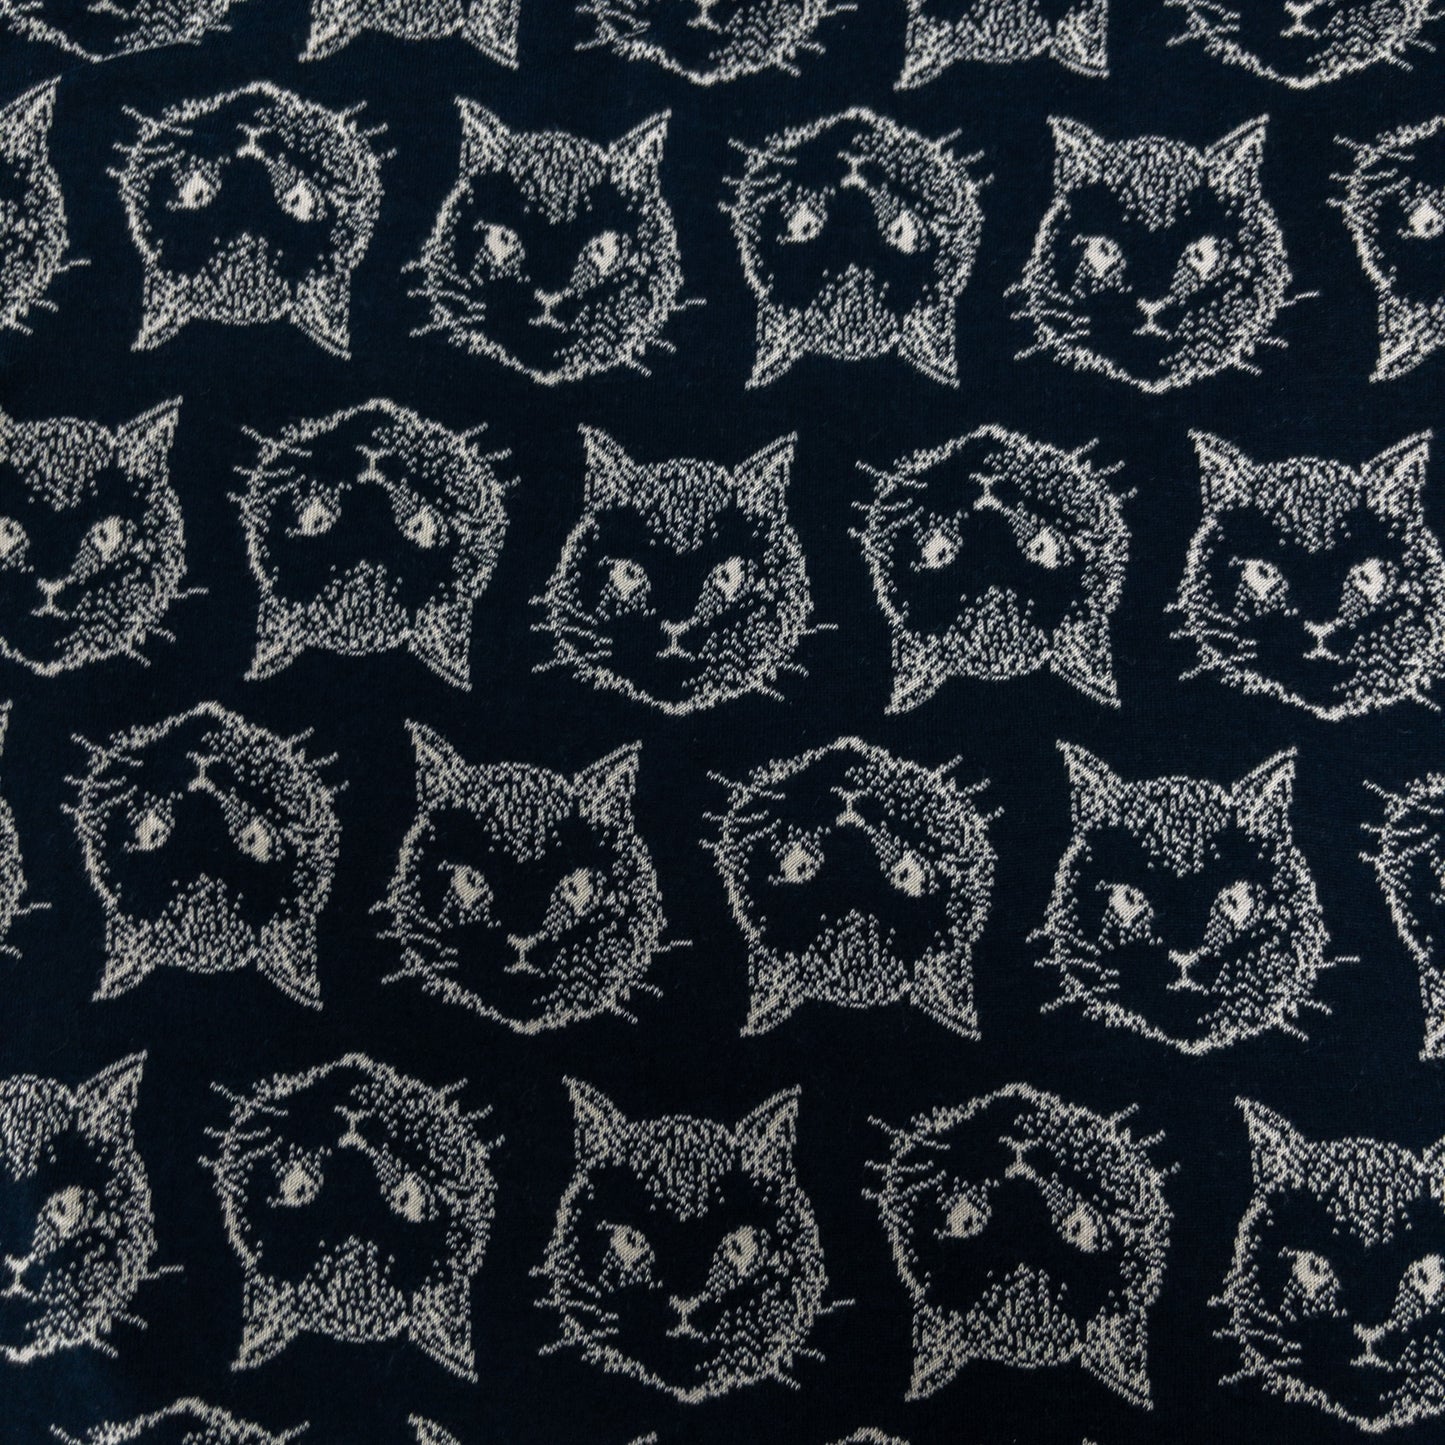 maffon | chaton cat navy beige 水鑽貓貓 深藍+米色 | cotton jacquard knit 雙面純棉提花針織 - 160cm